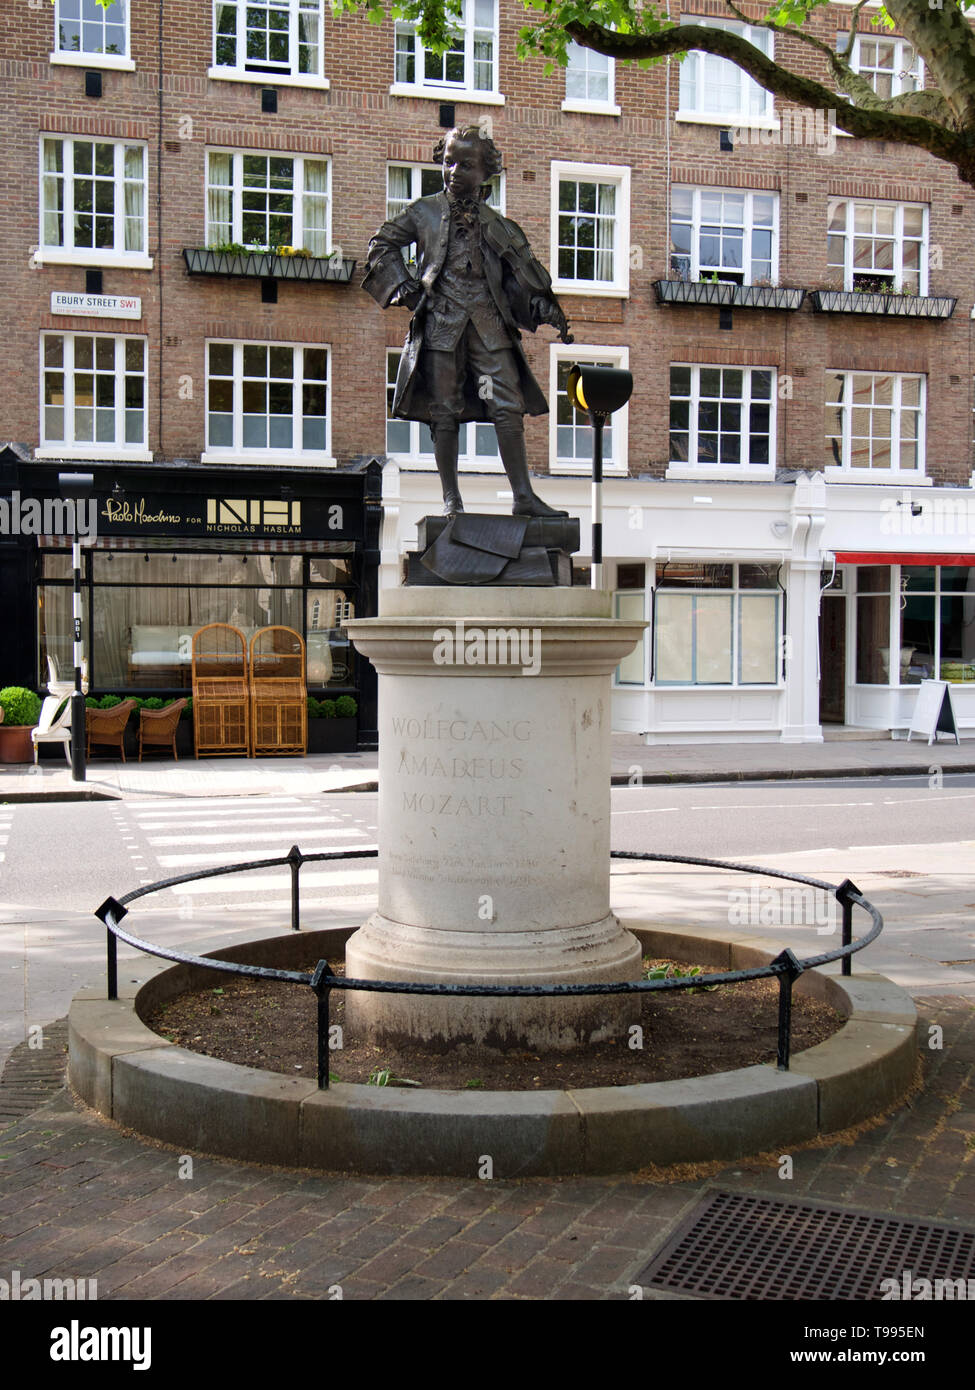 Statue of Mozart in London's Belgravia Stock Photo